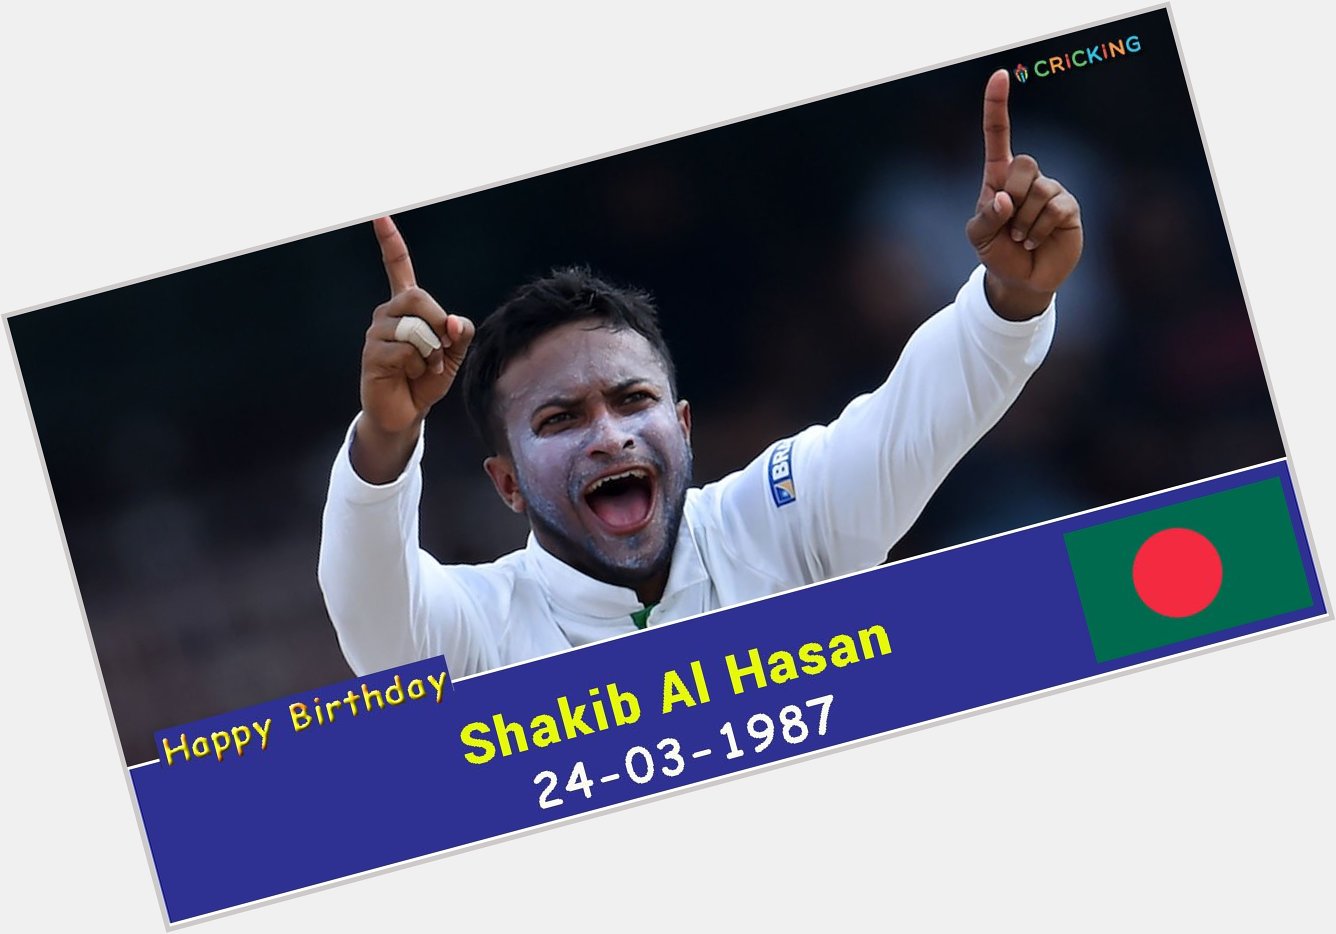 Happy Birthday Shakib Al Hasan. The Bangladesh cricketer turns 30 today. 